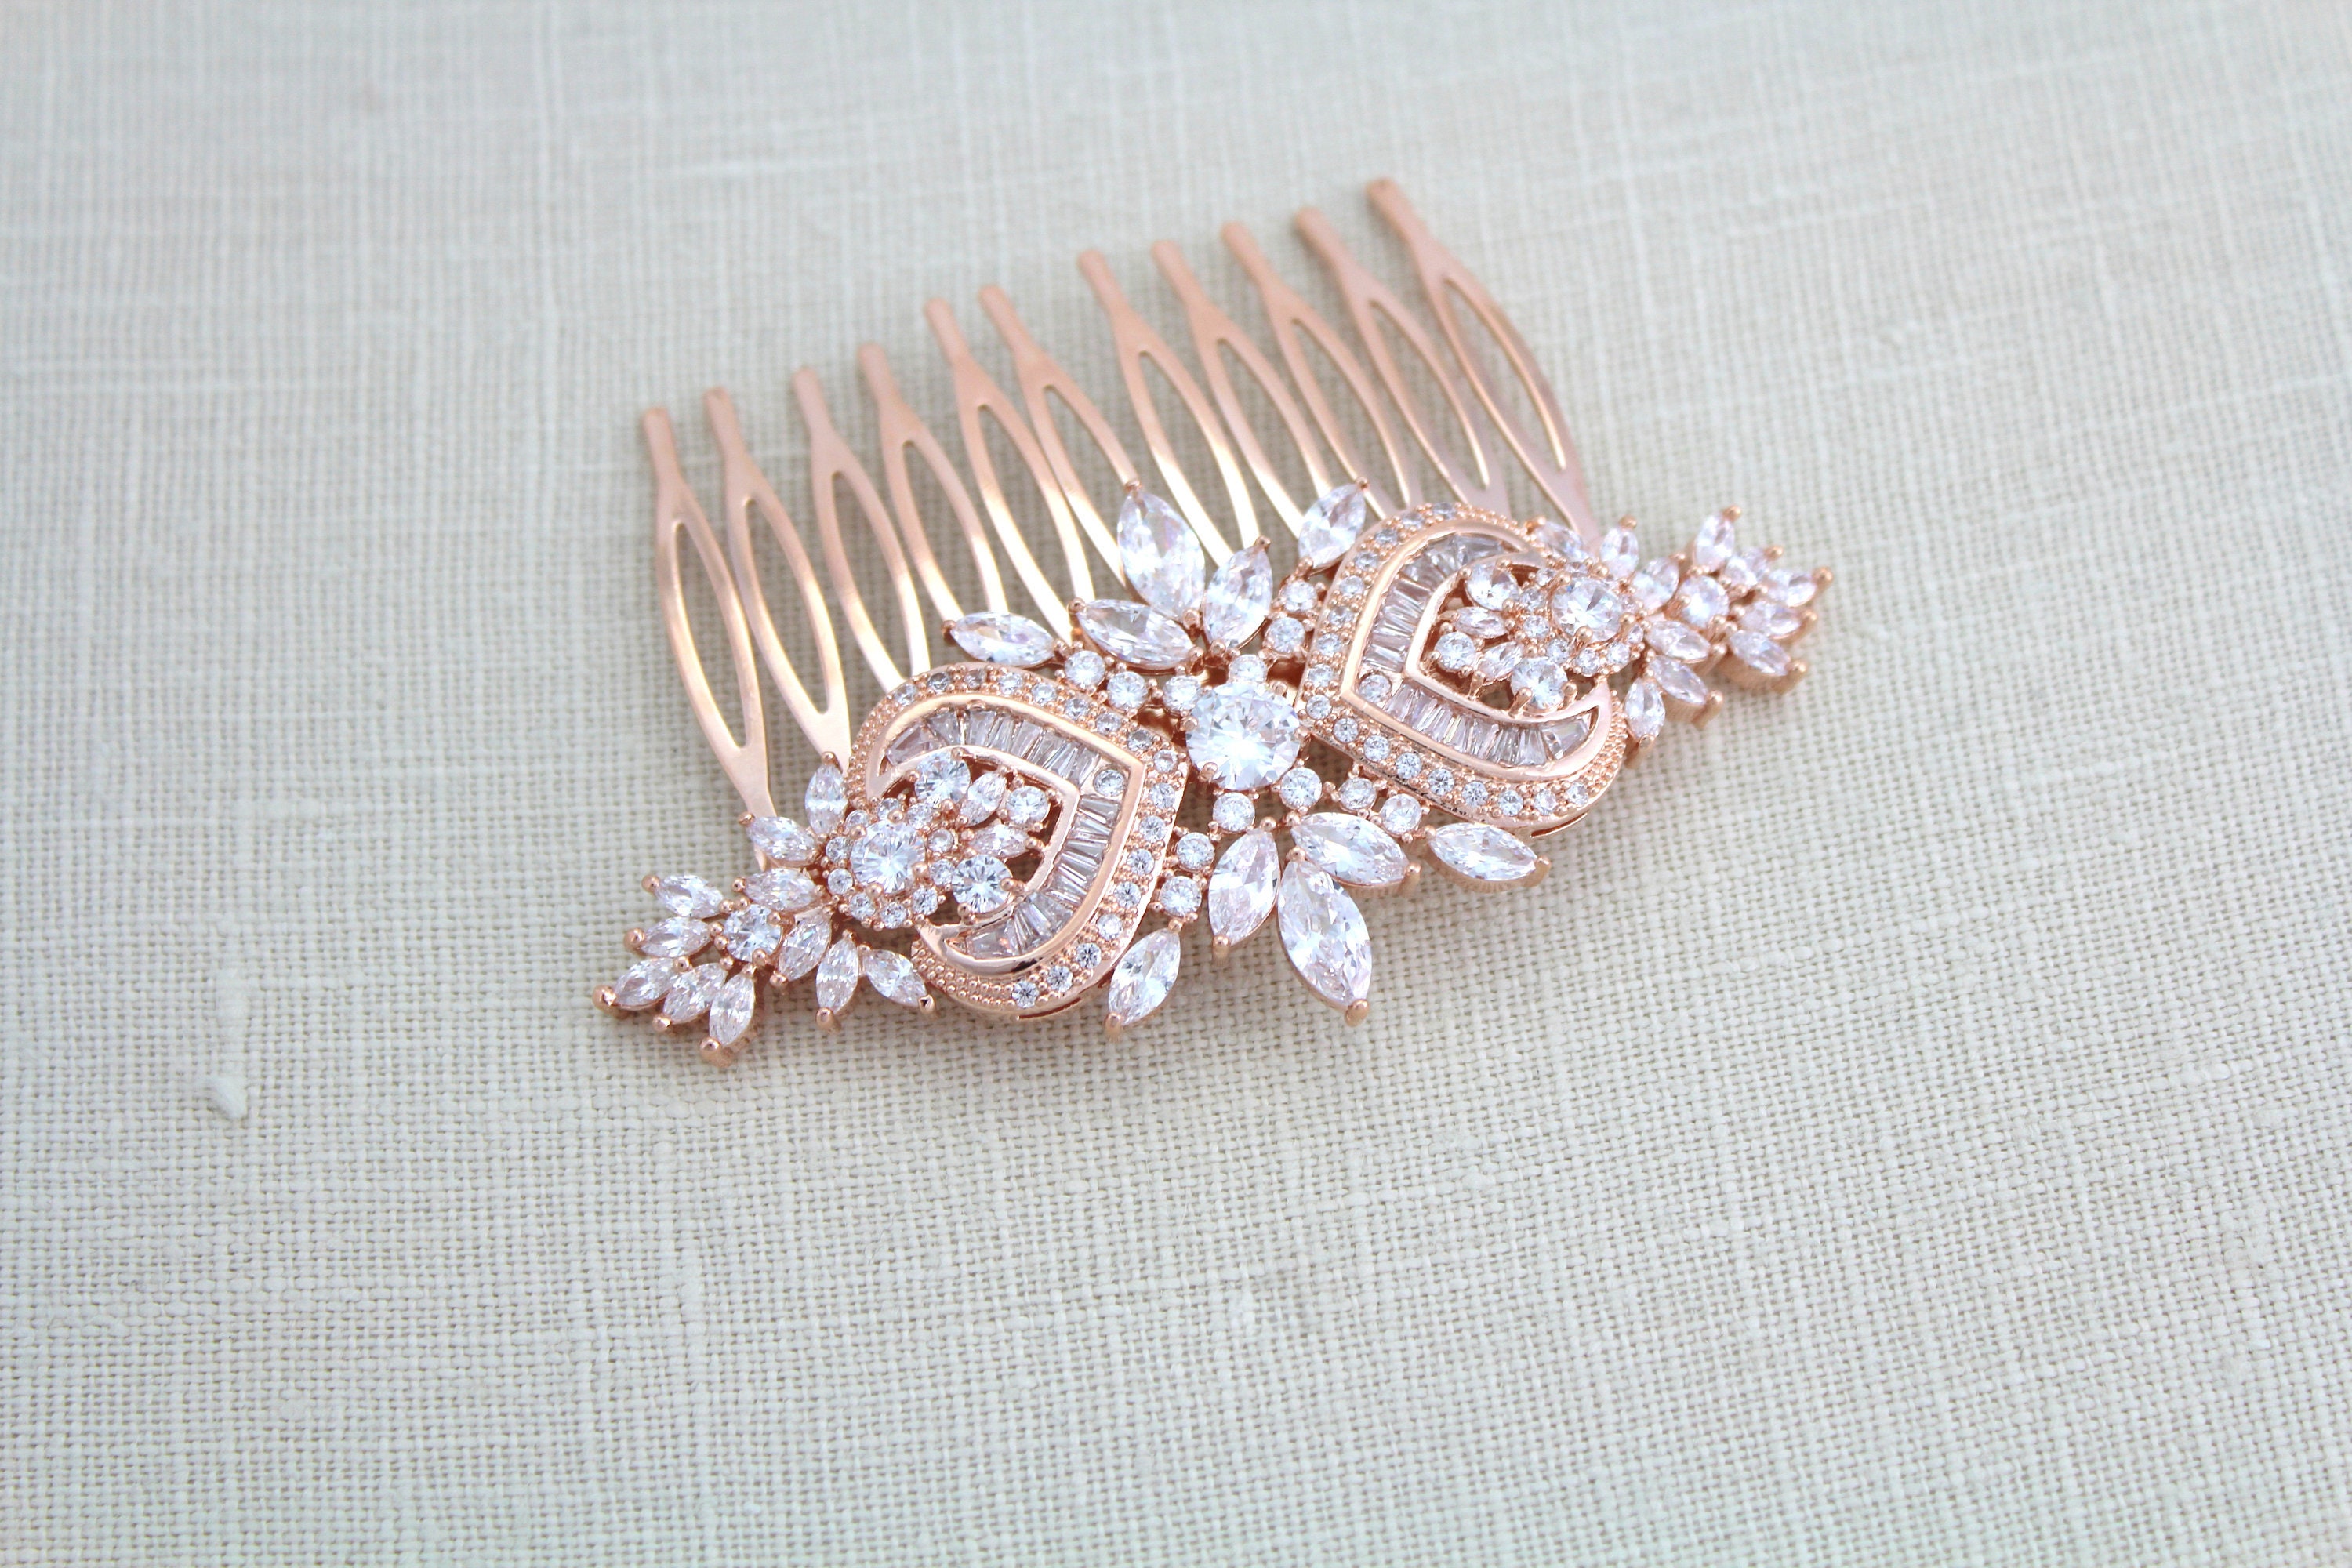 Bridal Comb Crystal Wedding Comb / Vintage Hair Accessory Crystal Comb Hair Clip Weddings Accessories Hair Accessories Decorative Combs 